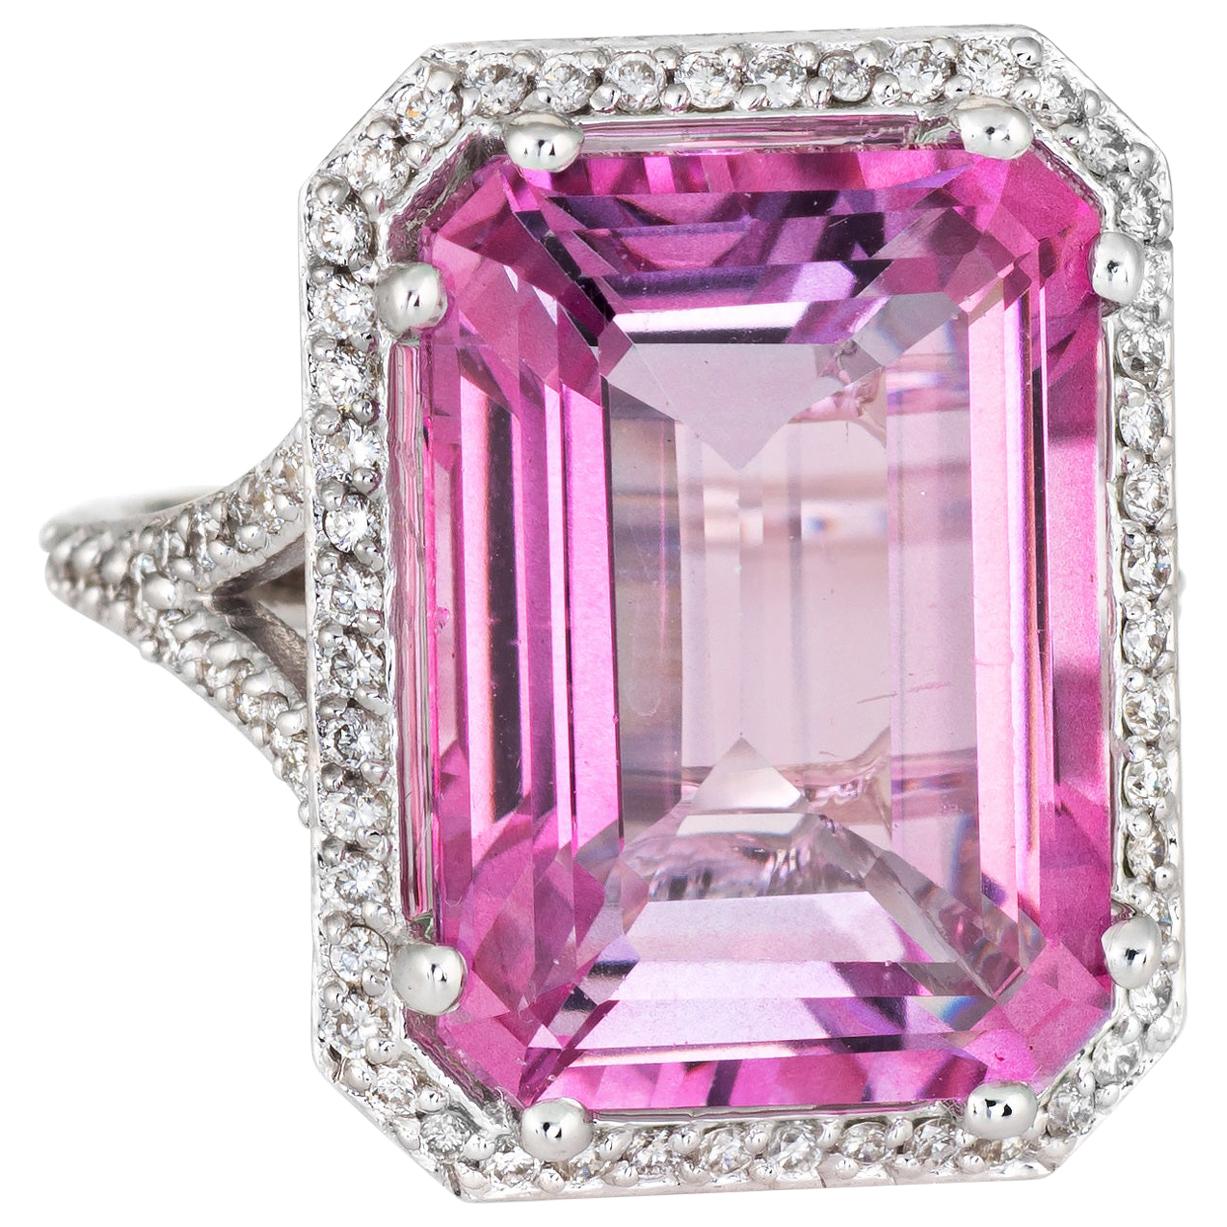 Pink Topaz Diamond Ring Large Square Cocktail Estate 18 Karat Gold Fine Jewelry